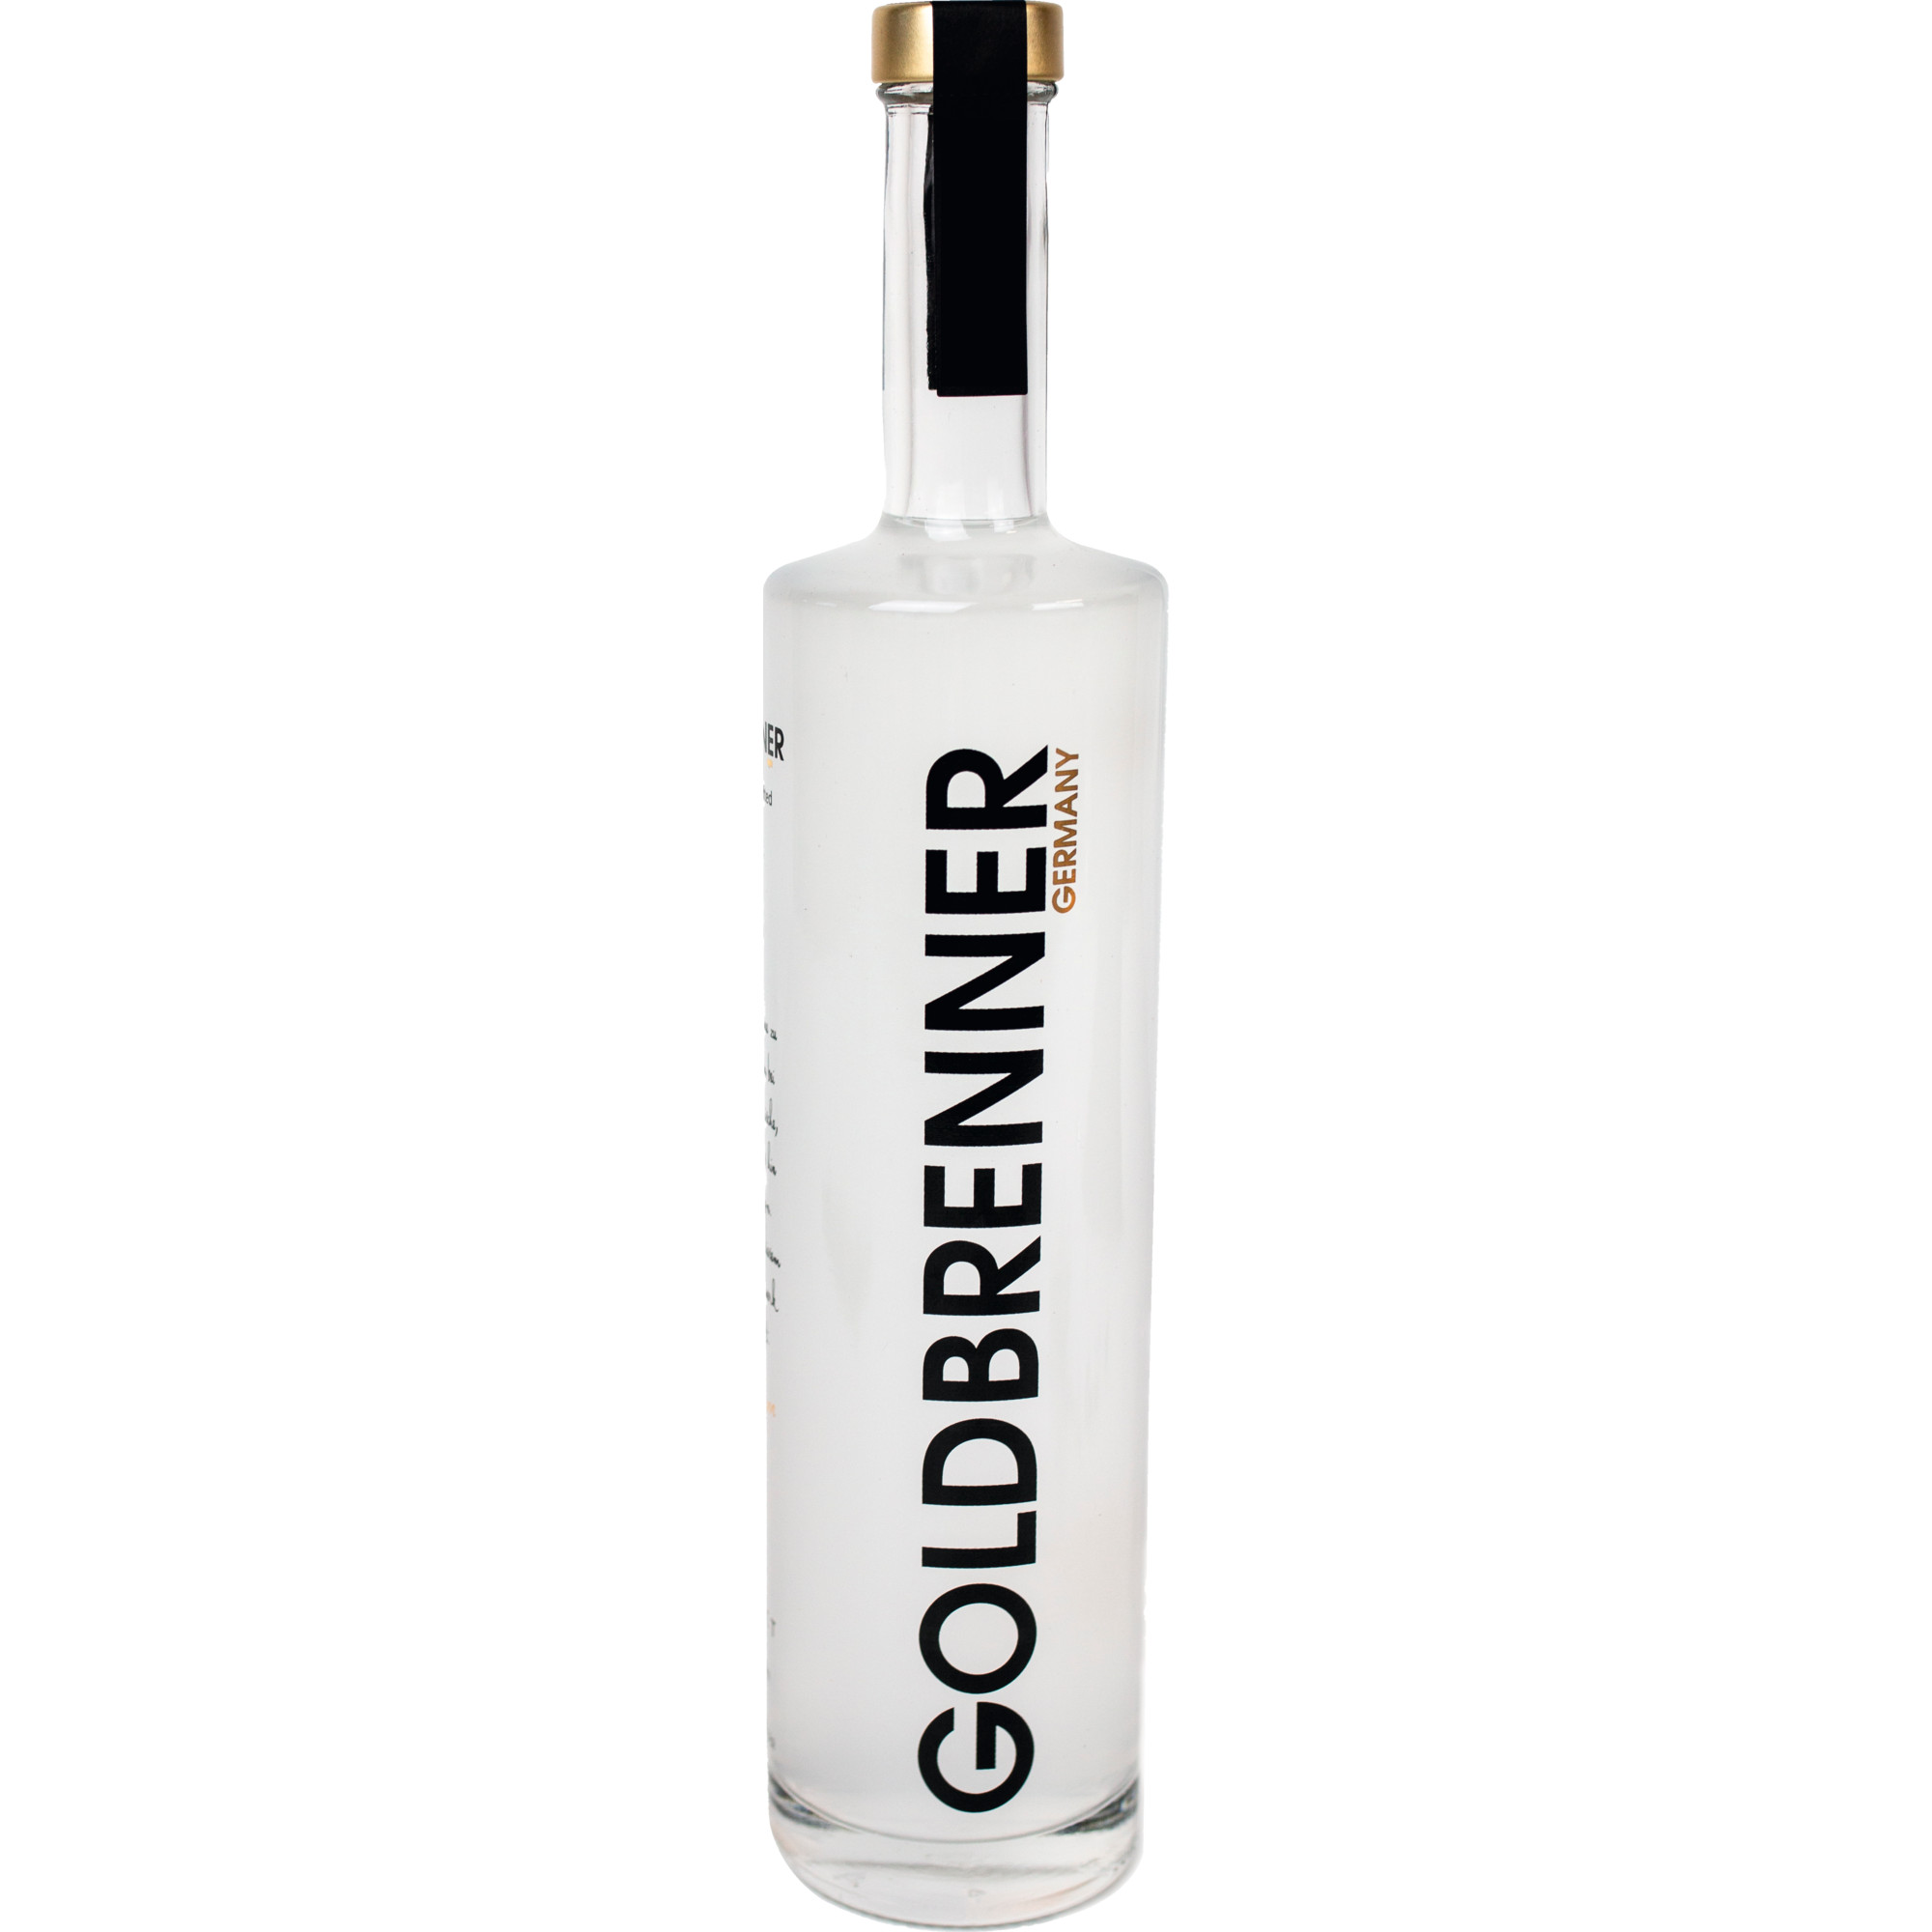 Goldbrenner Kaiserstuhl Dry Gin, 40 % vol. 0,7 L, Spirituosen  Spirituosen Hawesko